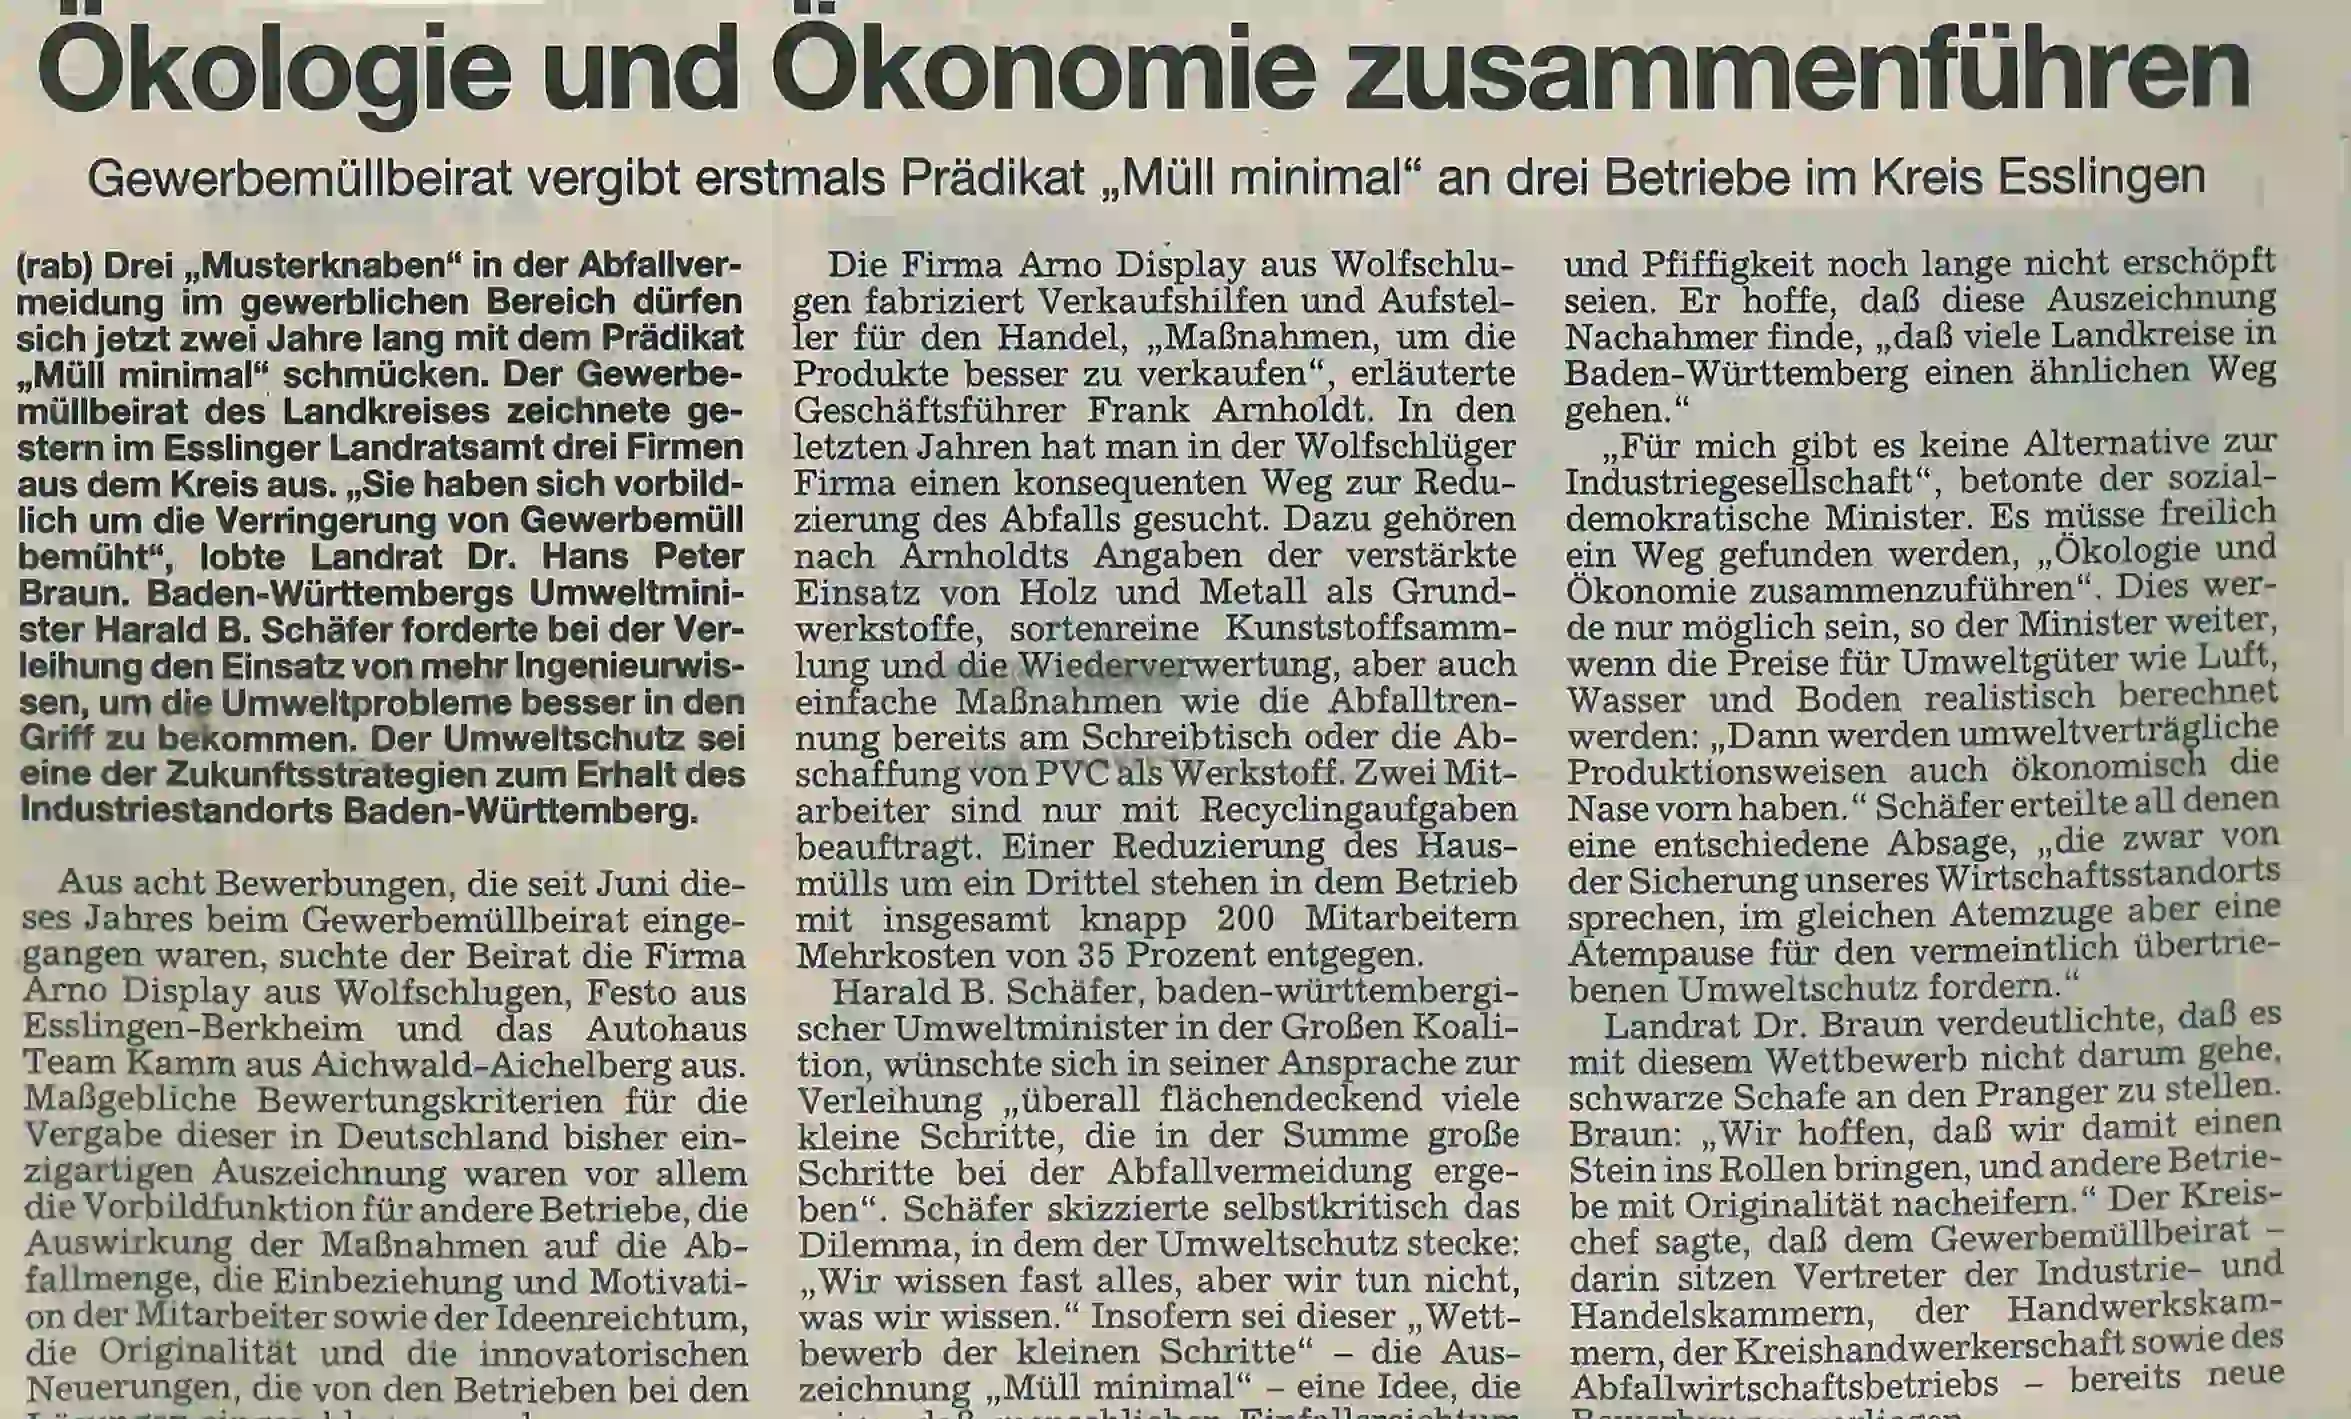 Pioneer in sustainability 1993 - newspaper article